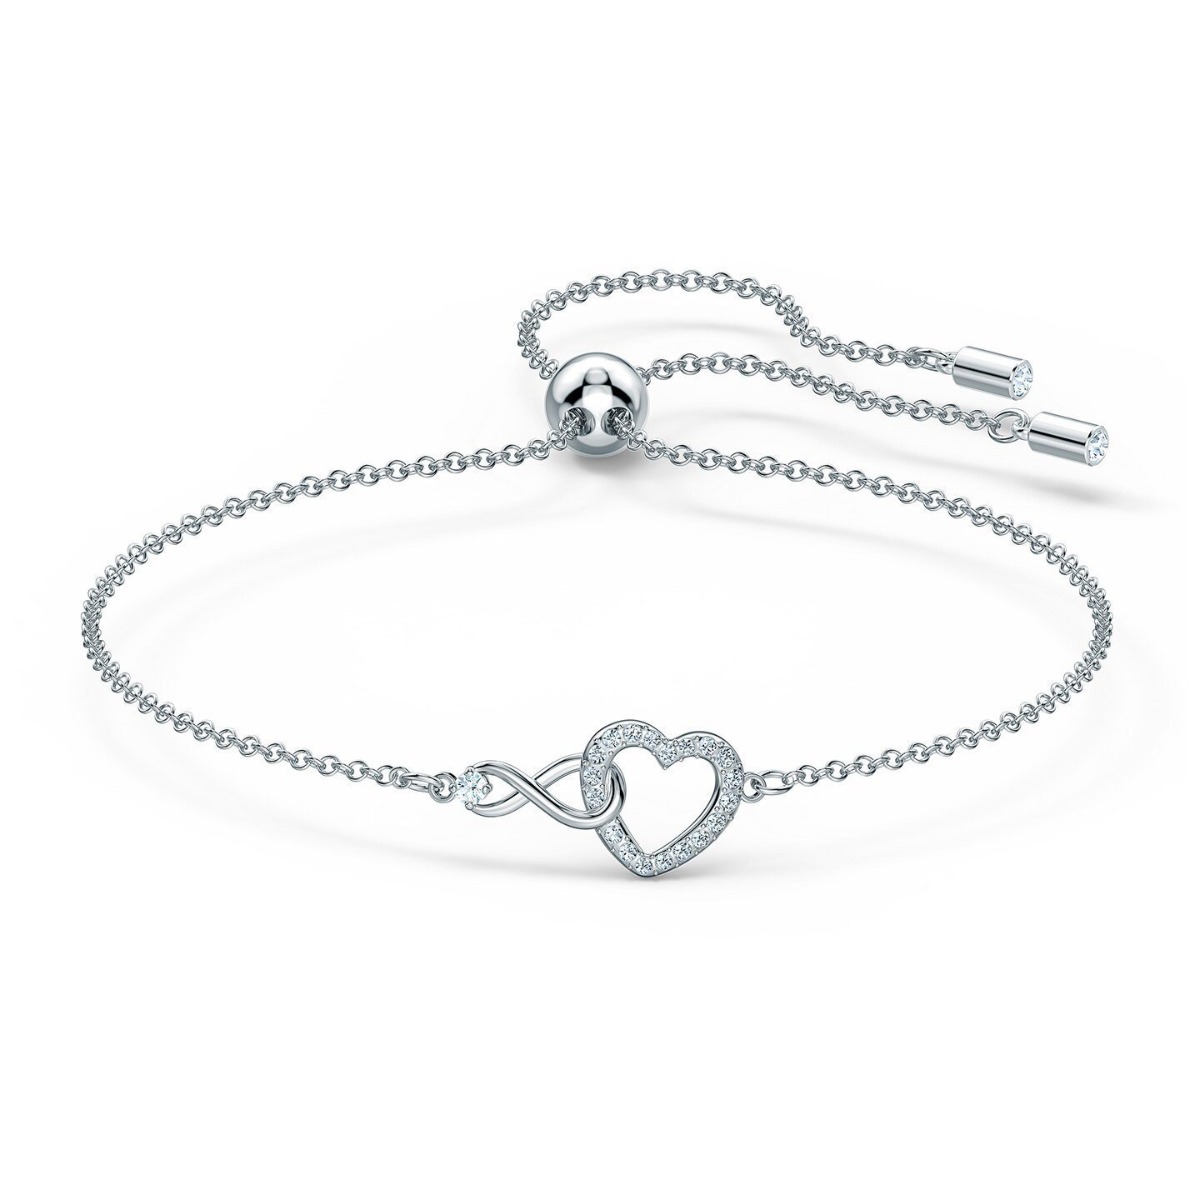 Photos - Bracelet Swarovski Infinity Heart  - White with Rhodium Plating 